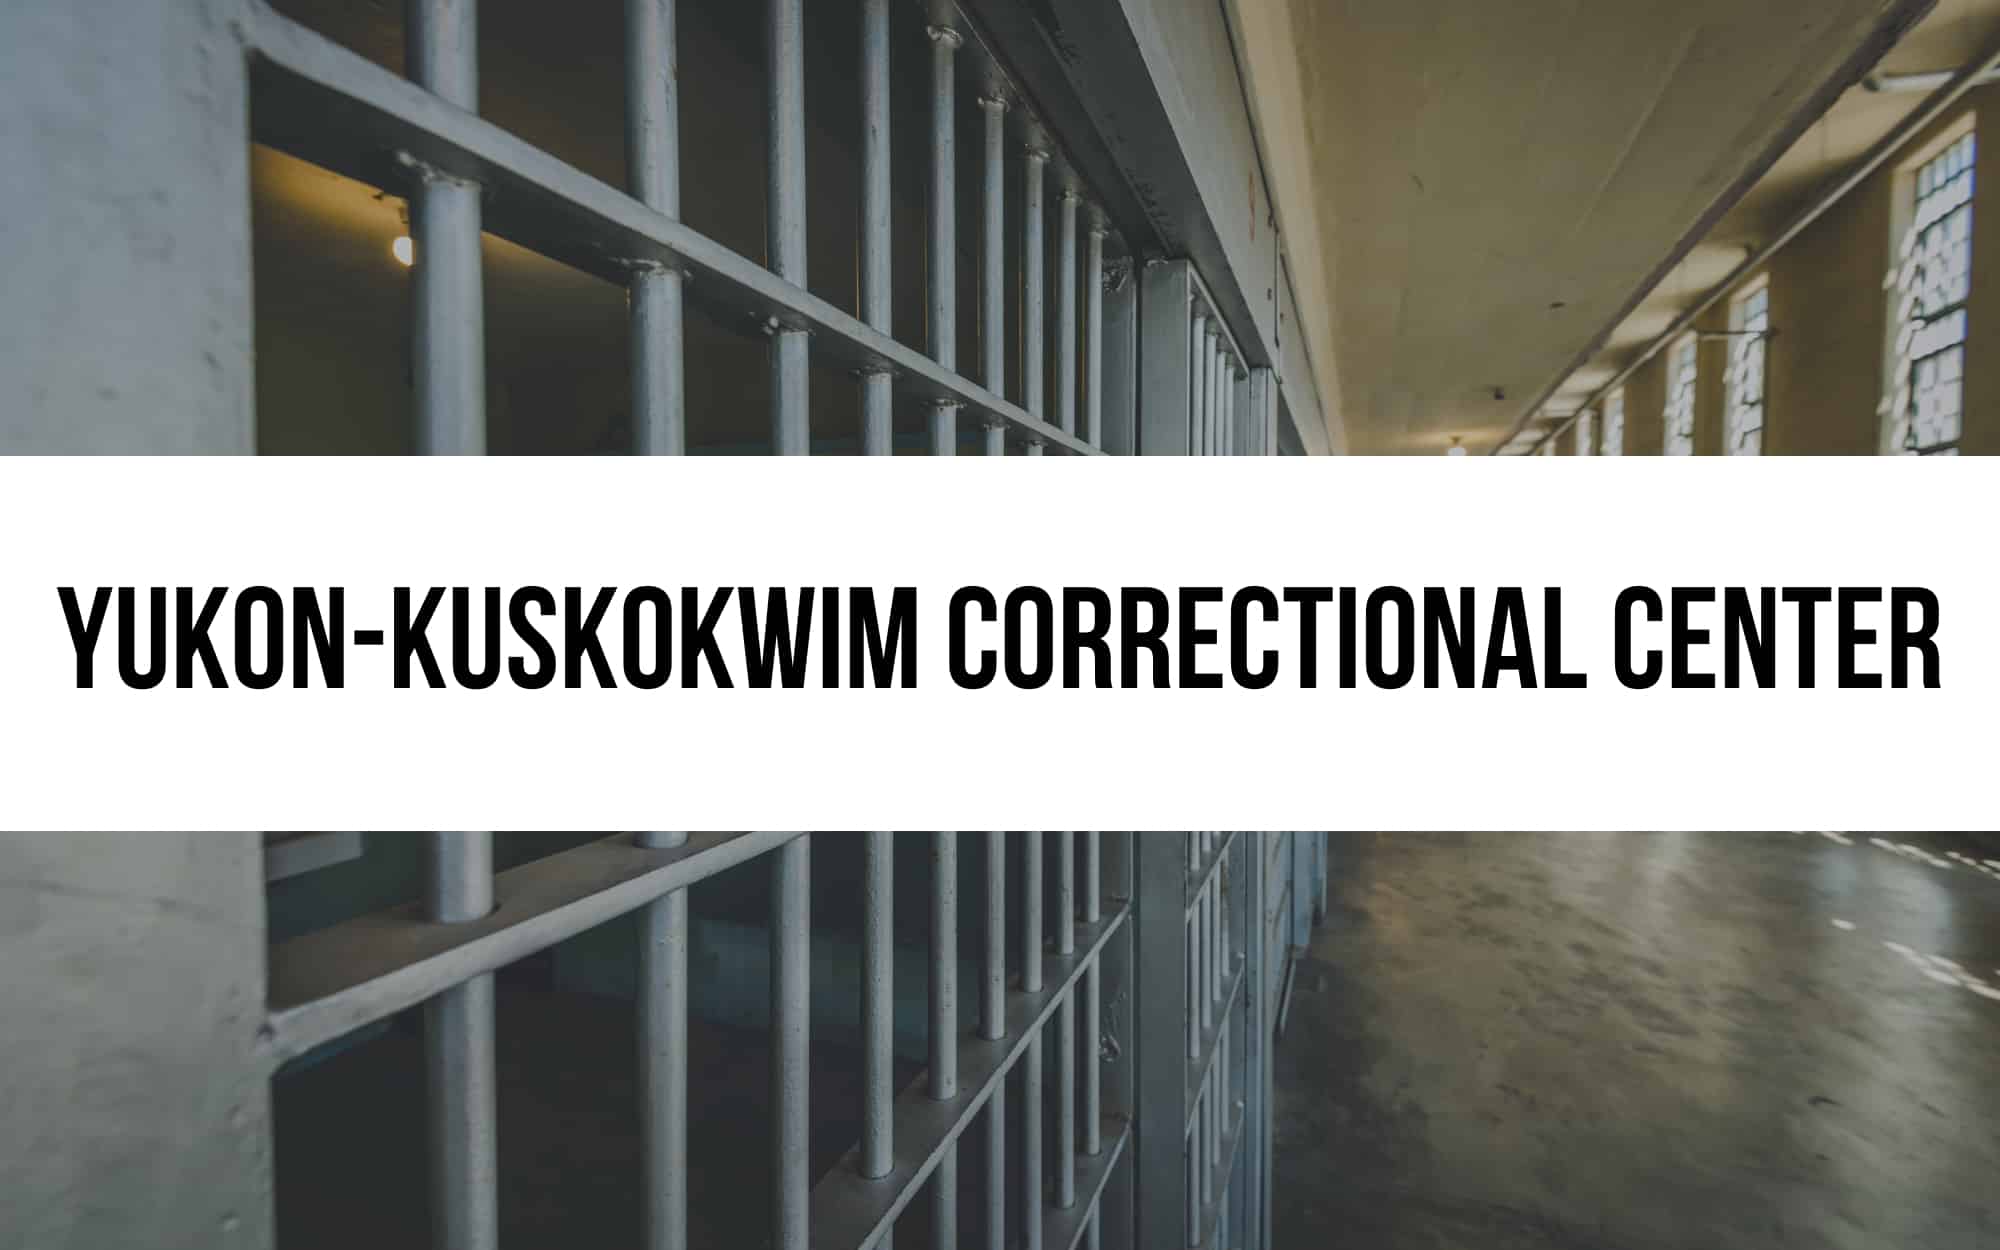 Yukon-Kuskokwim Correctional Center